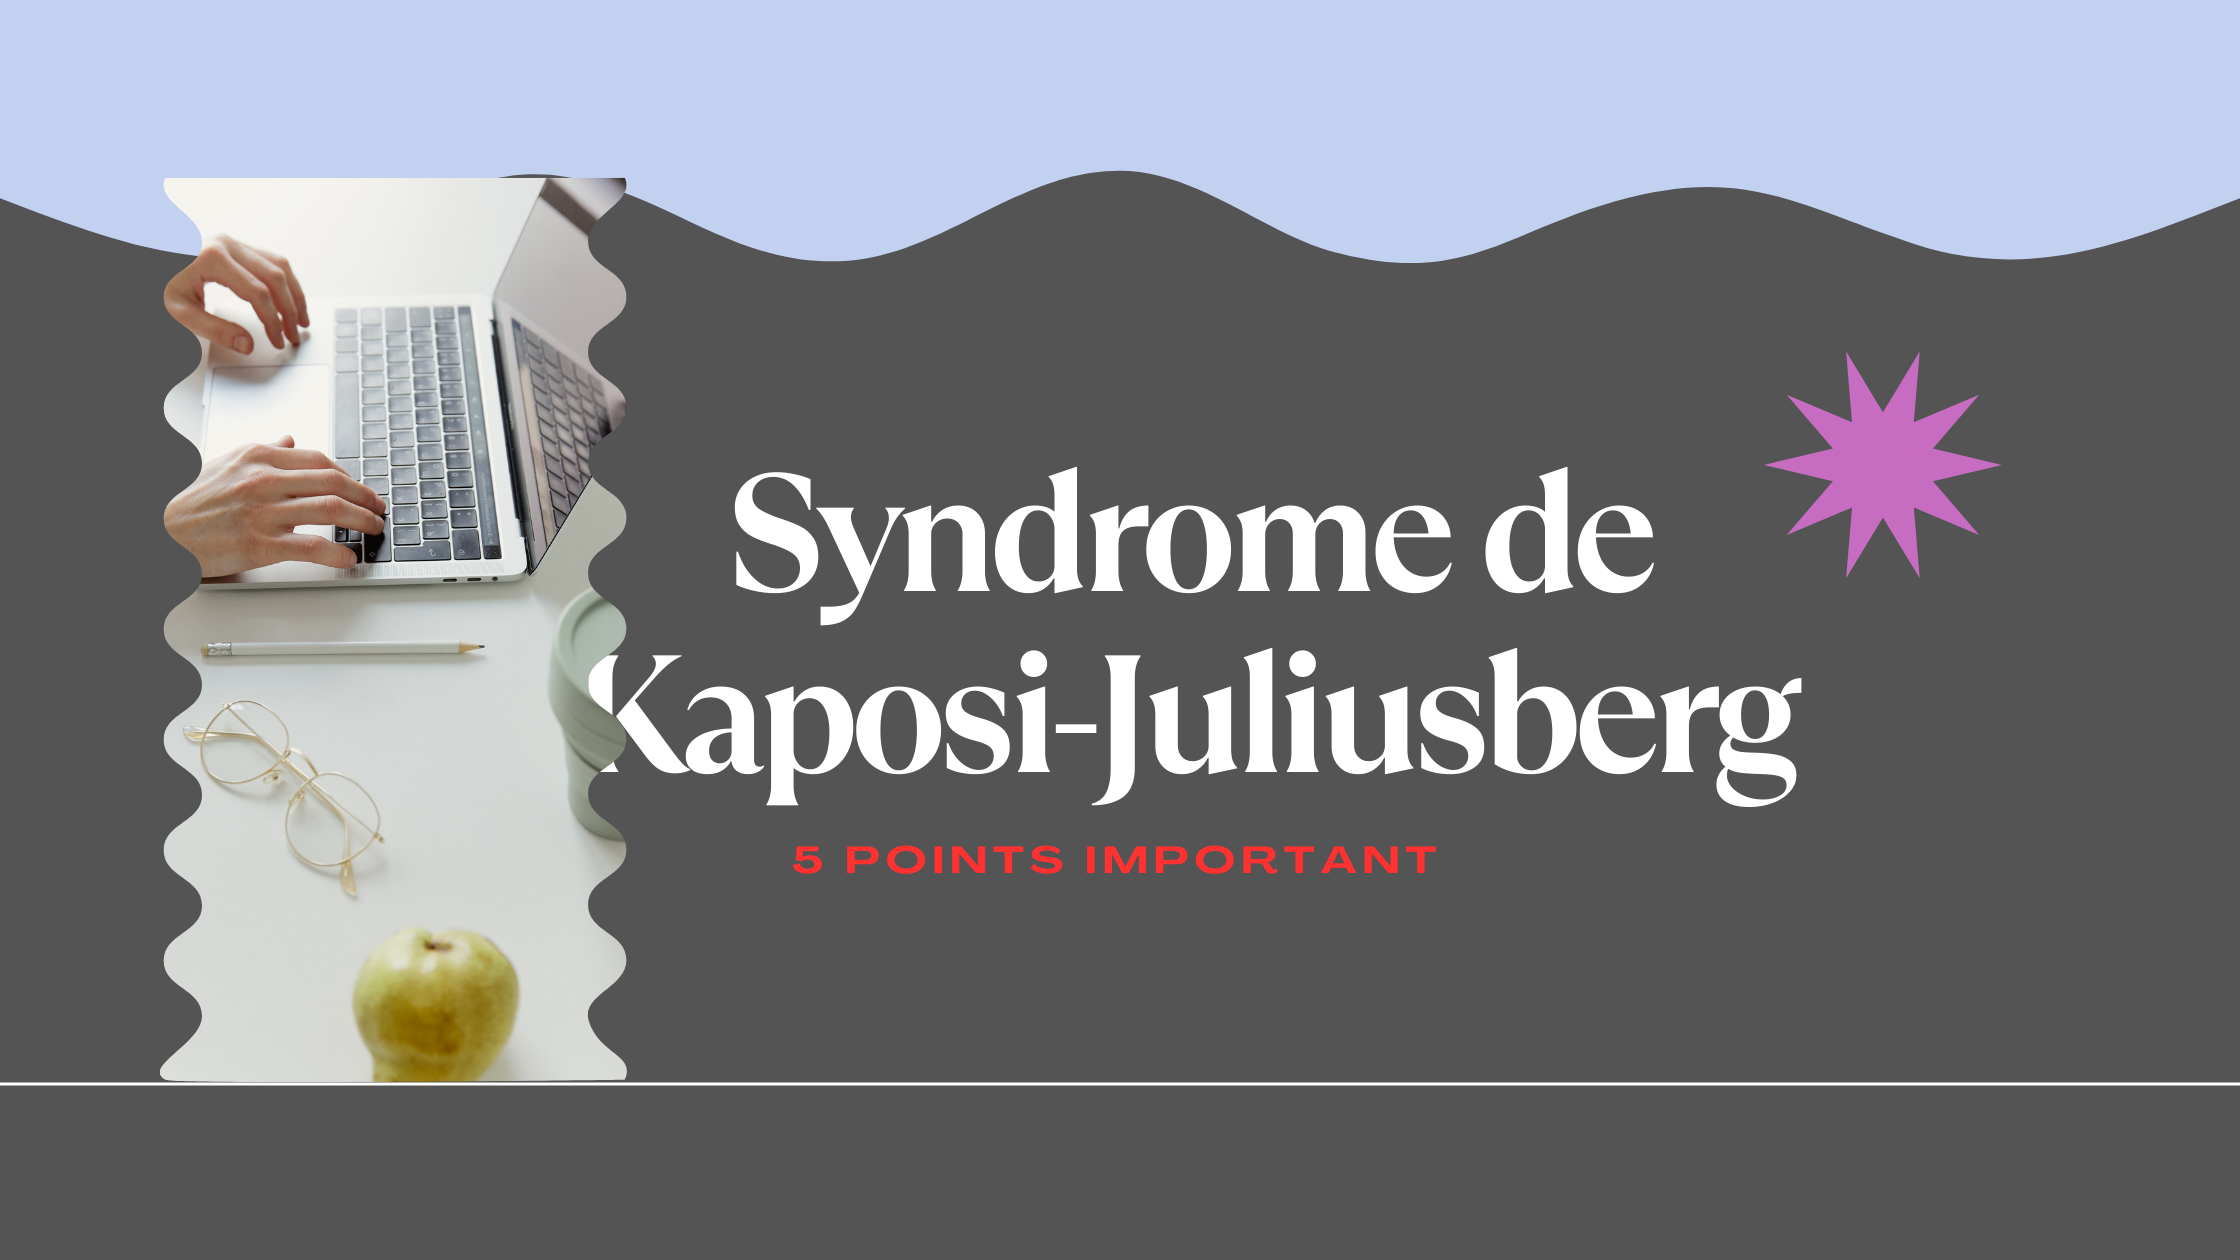 Syndrome de Kaposi-Juliusberg | 5 Points Important